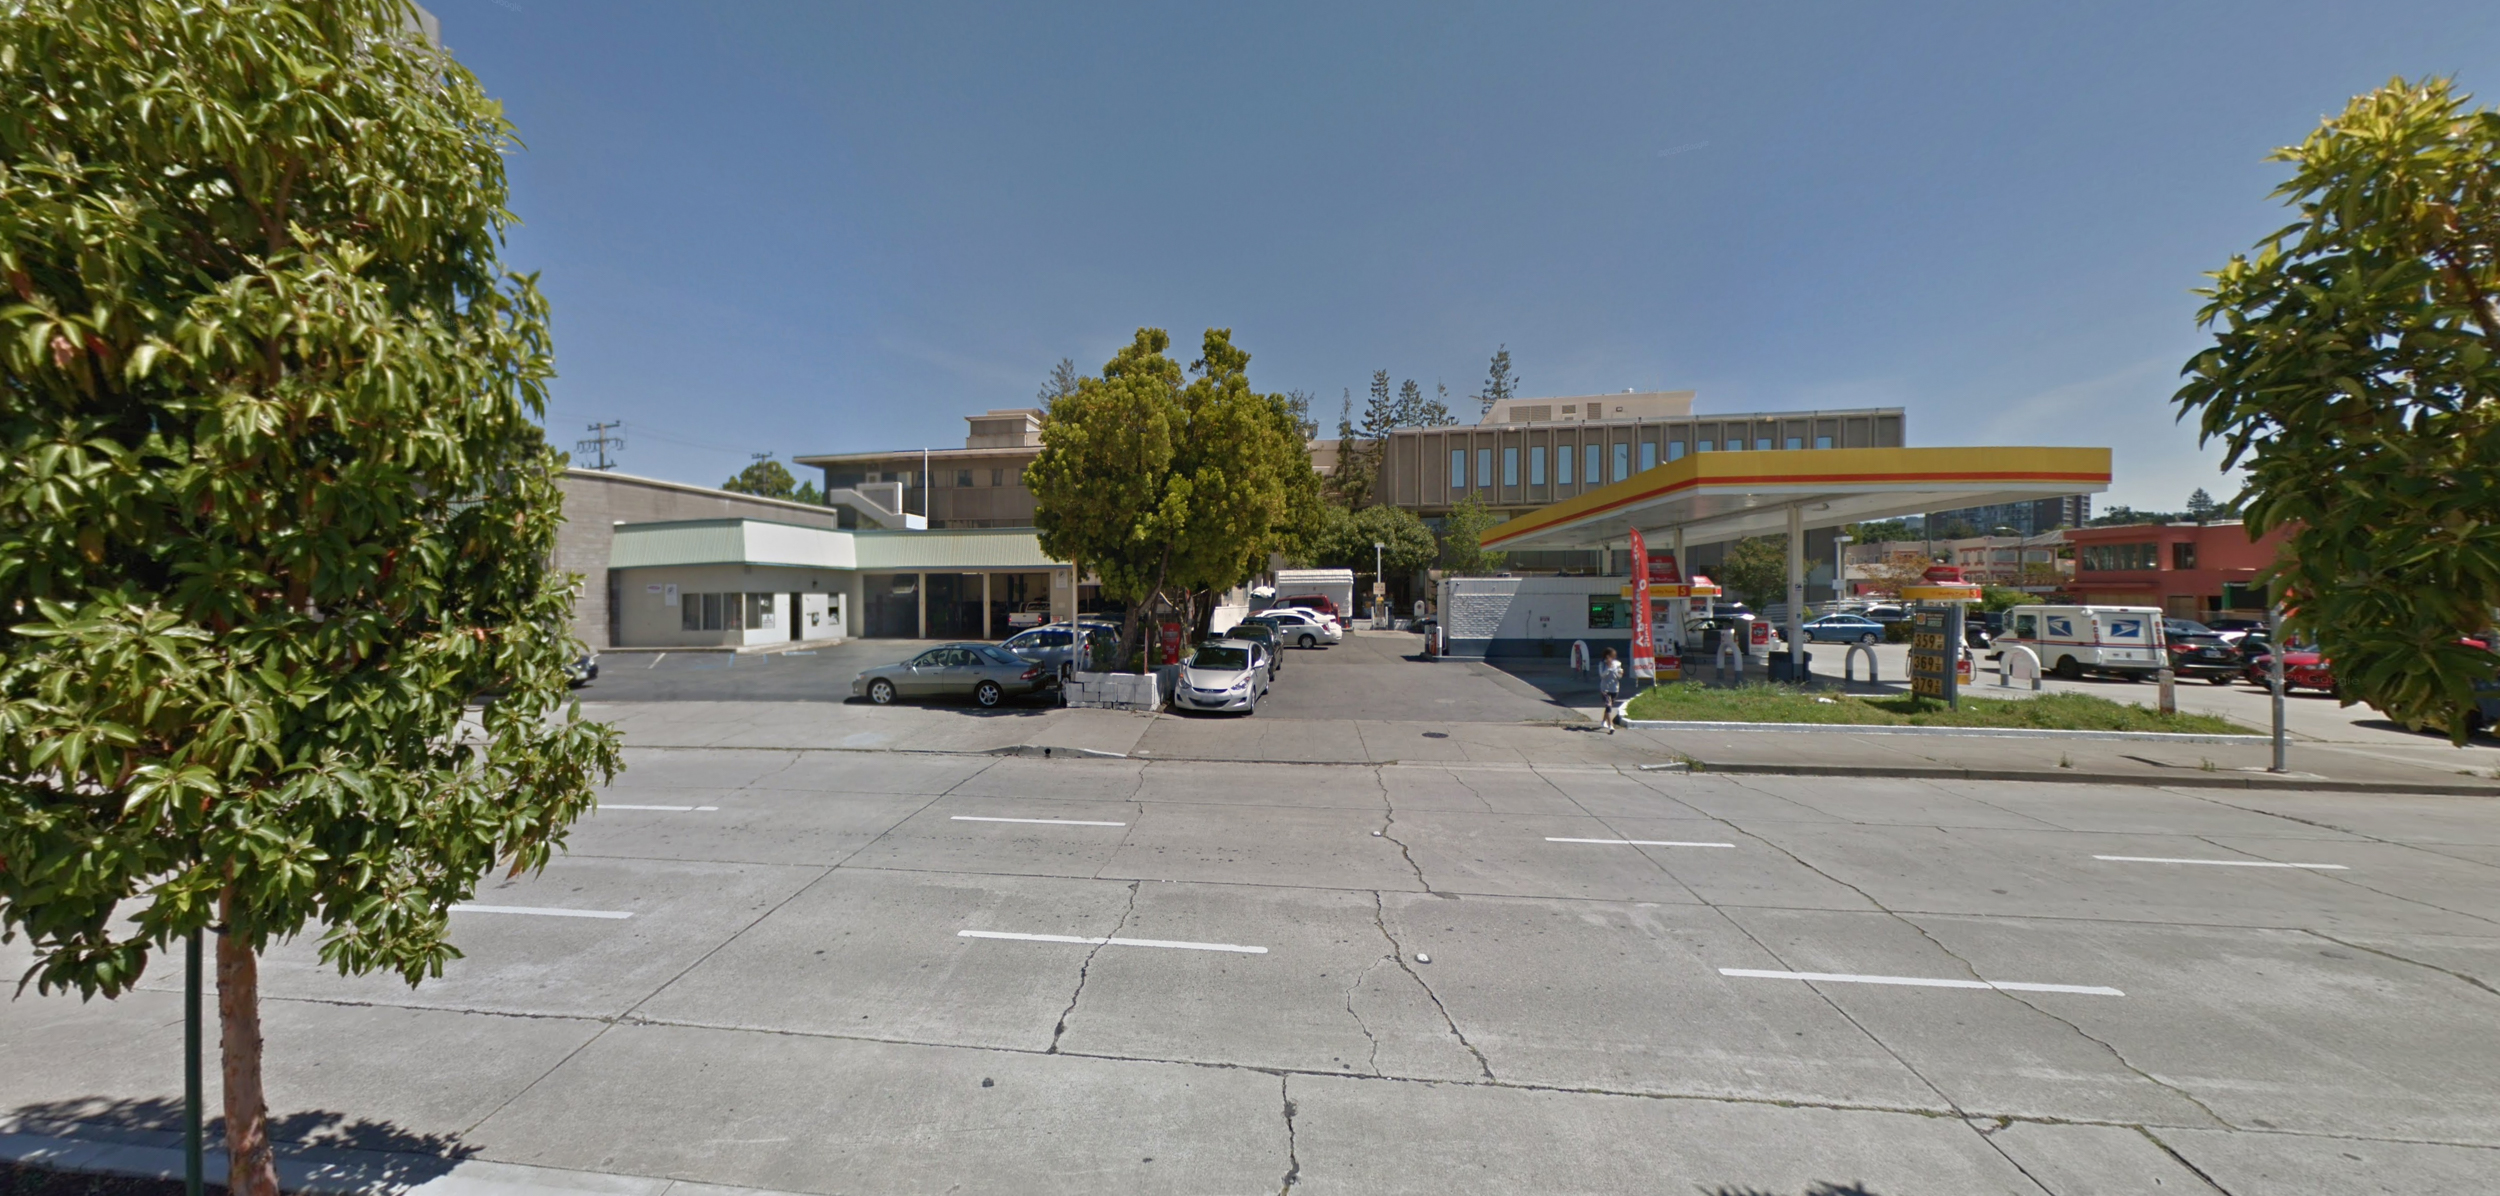 240 West MacArthur Boulevard previous condition, image via Google Street View